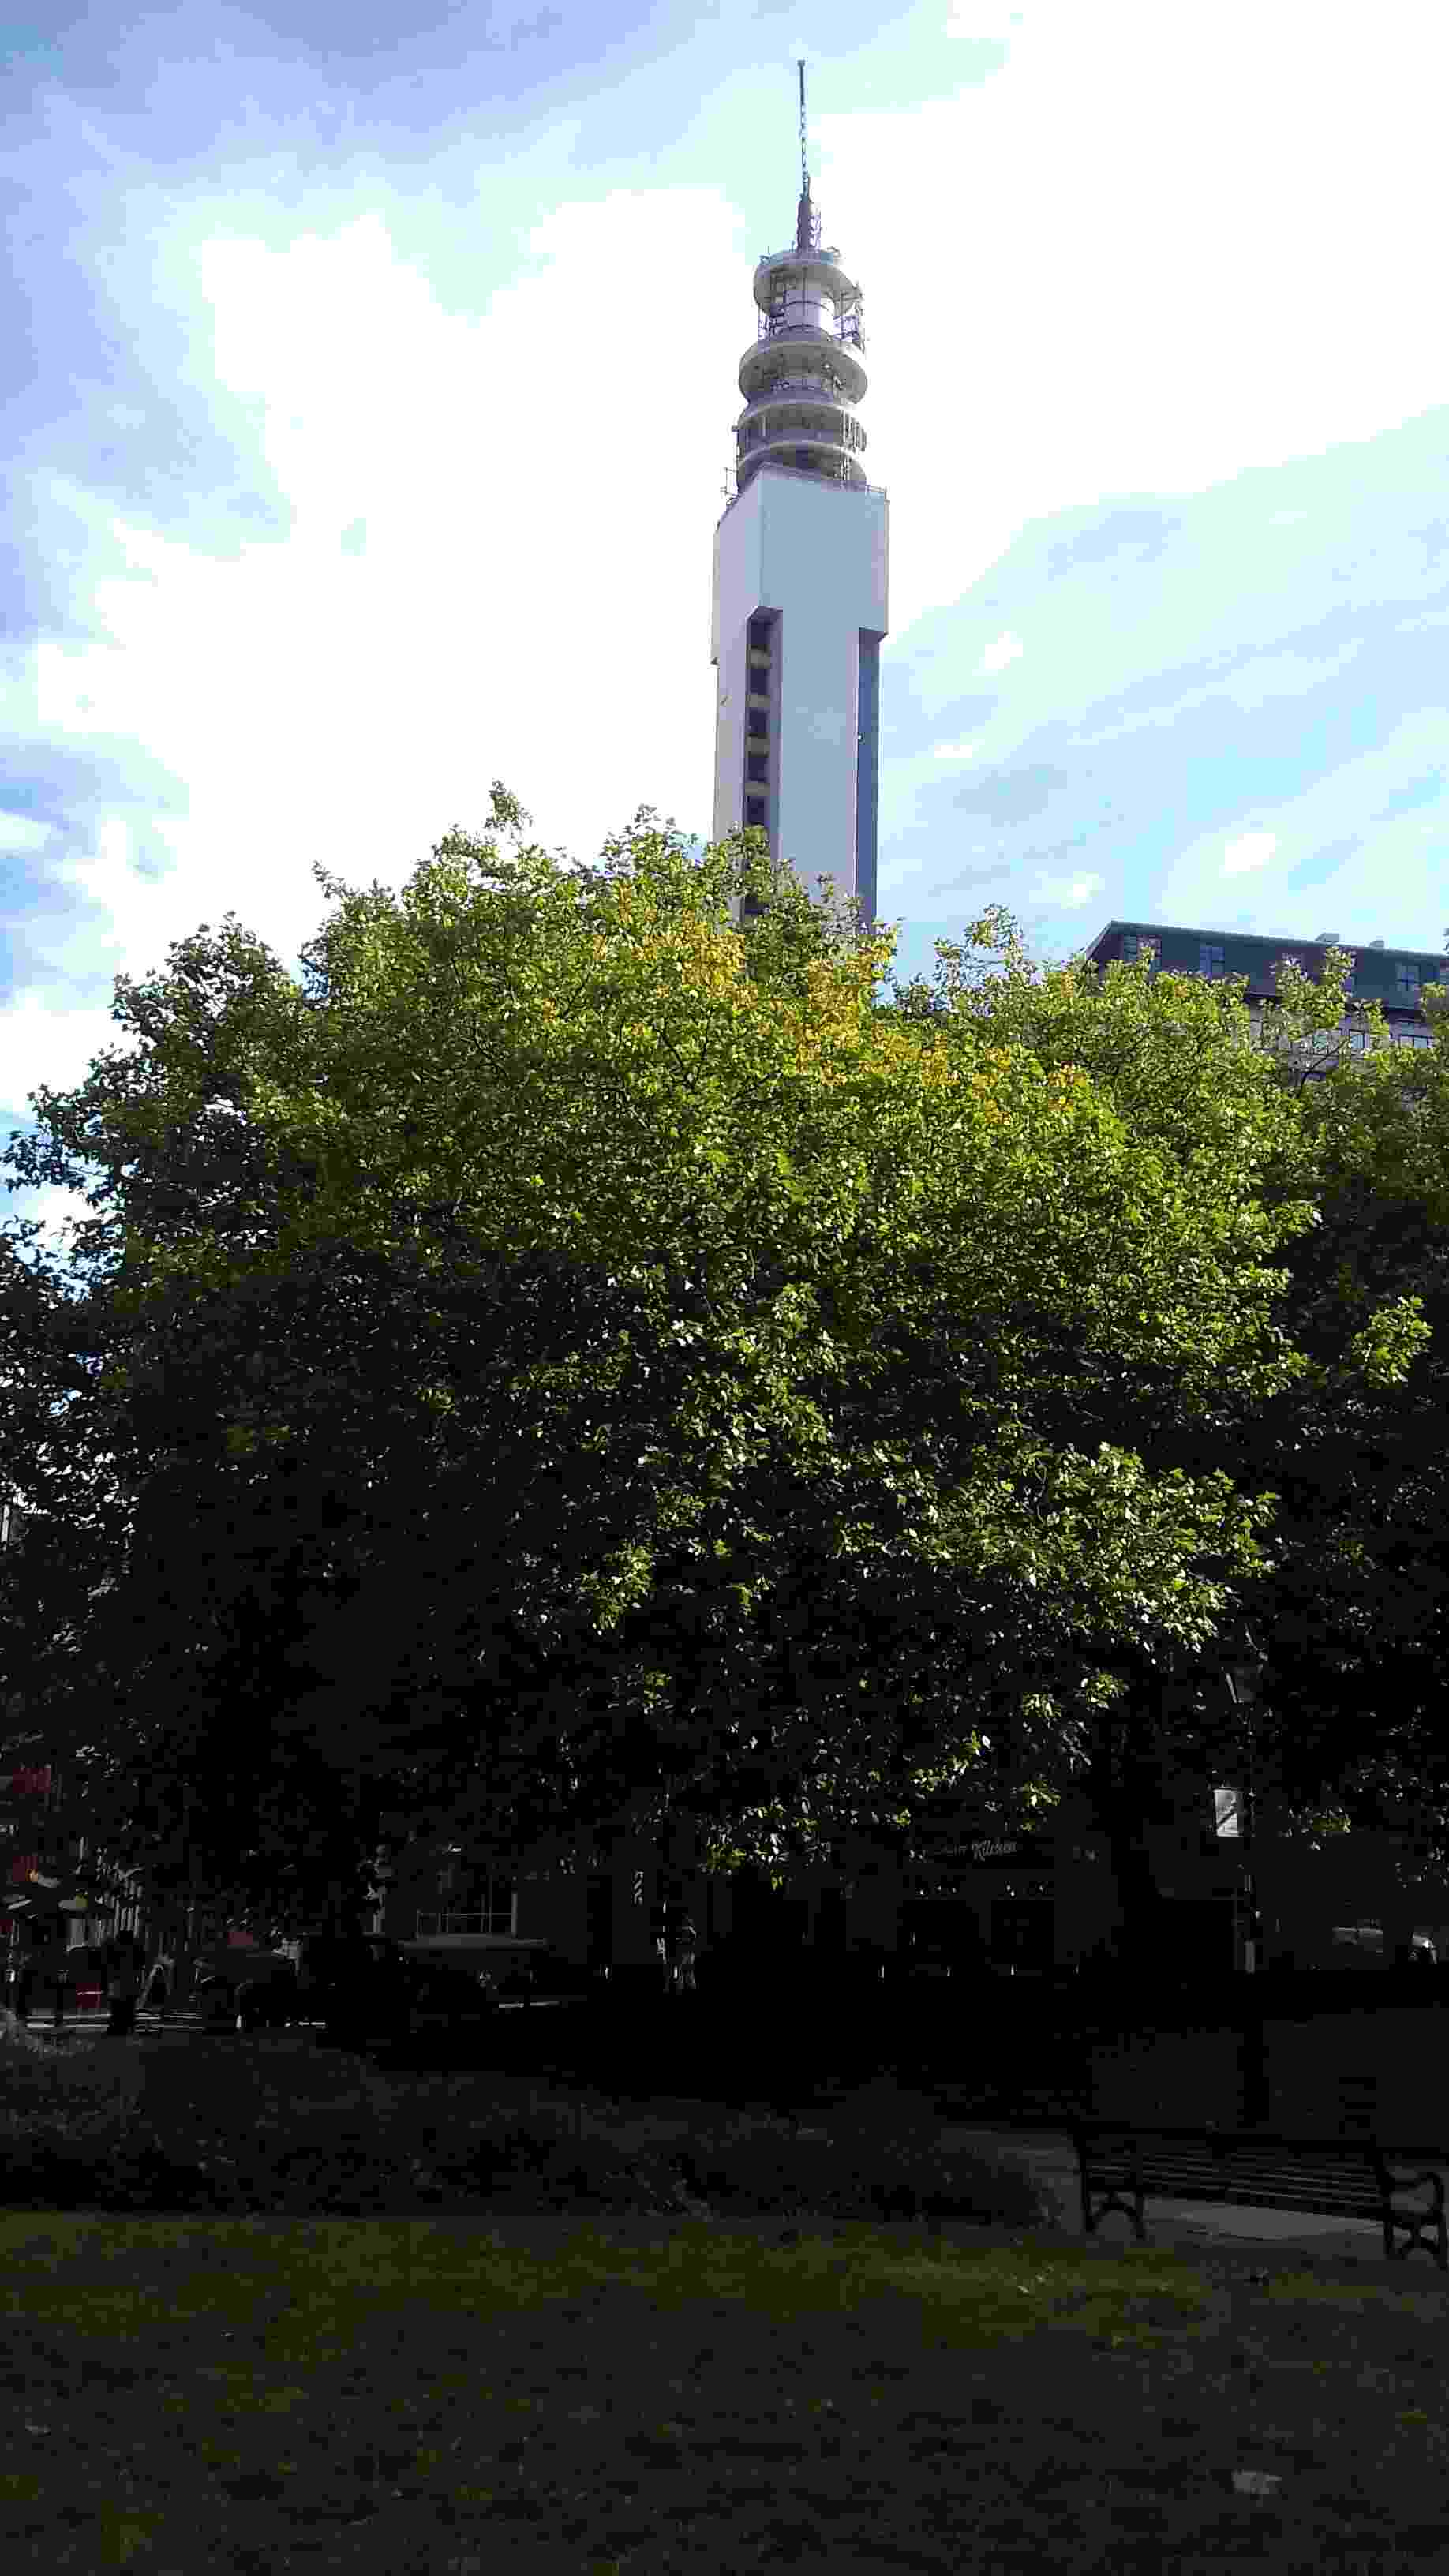 ImagesBirmingham/Birmingham Centre BT Tower.jpg